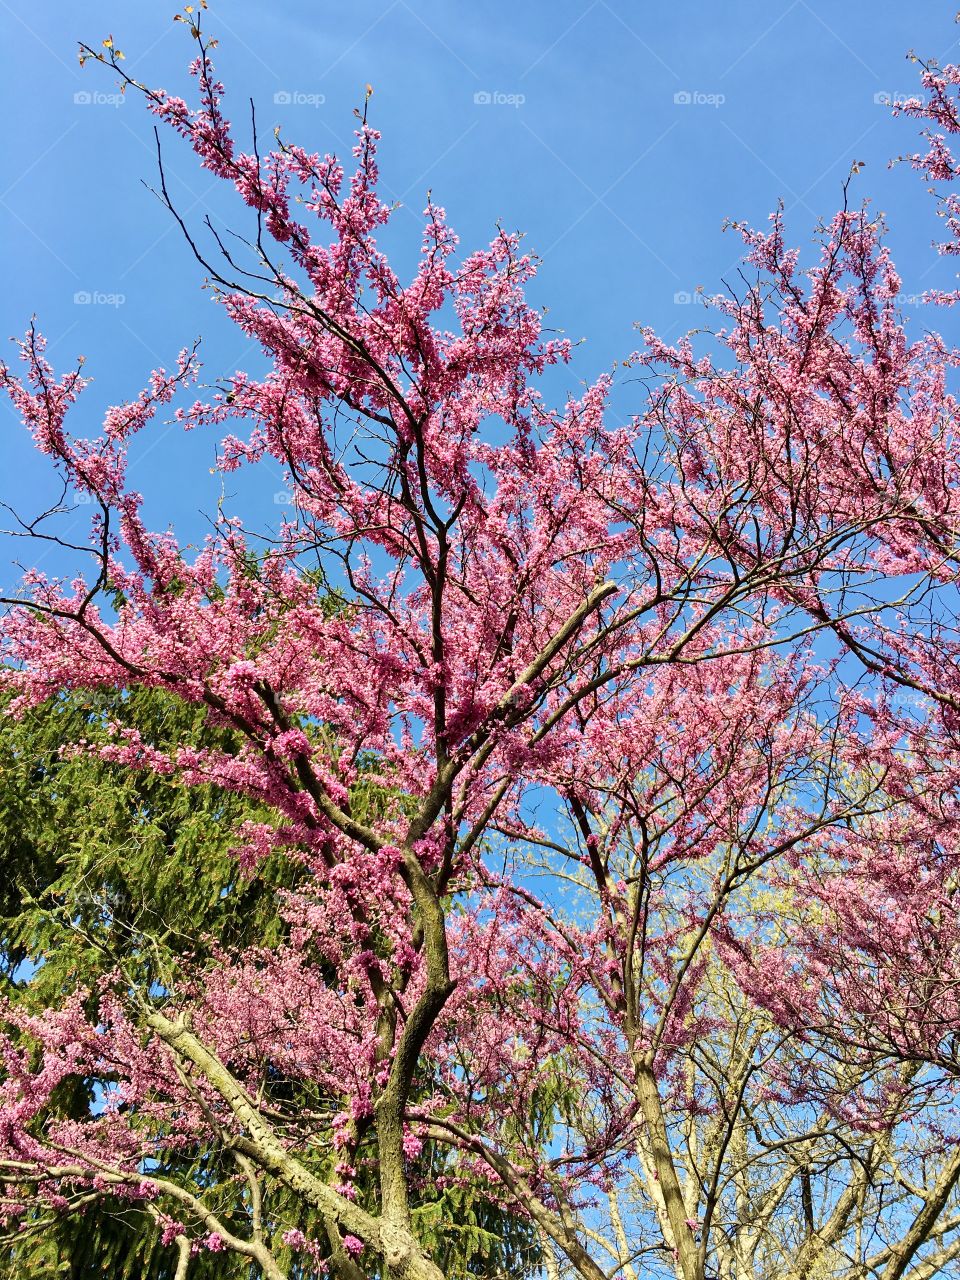 Spring blooms in Ohio 